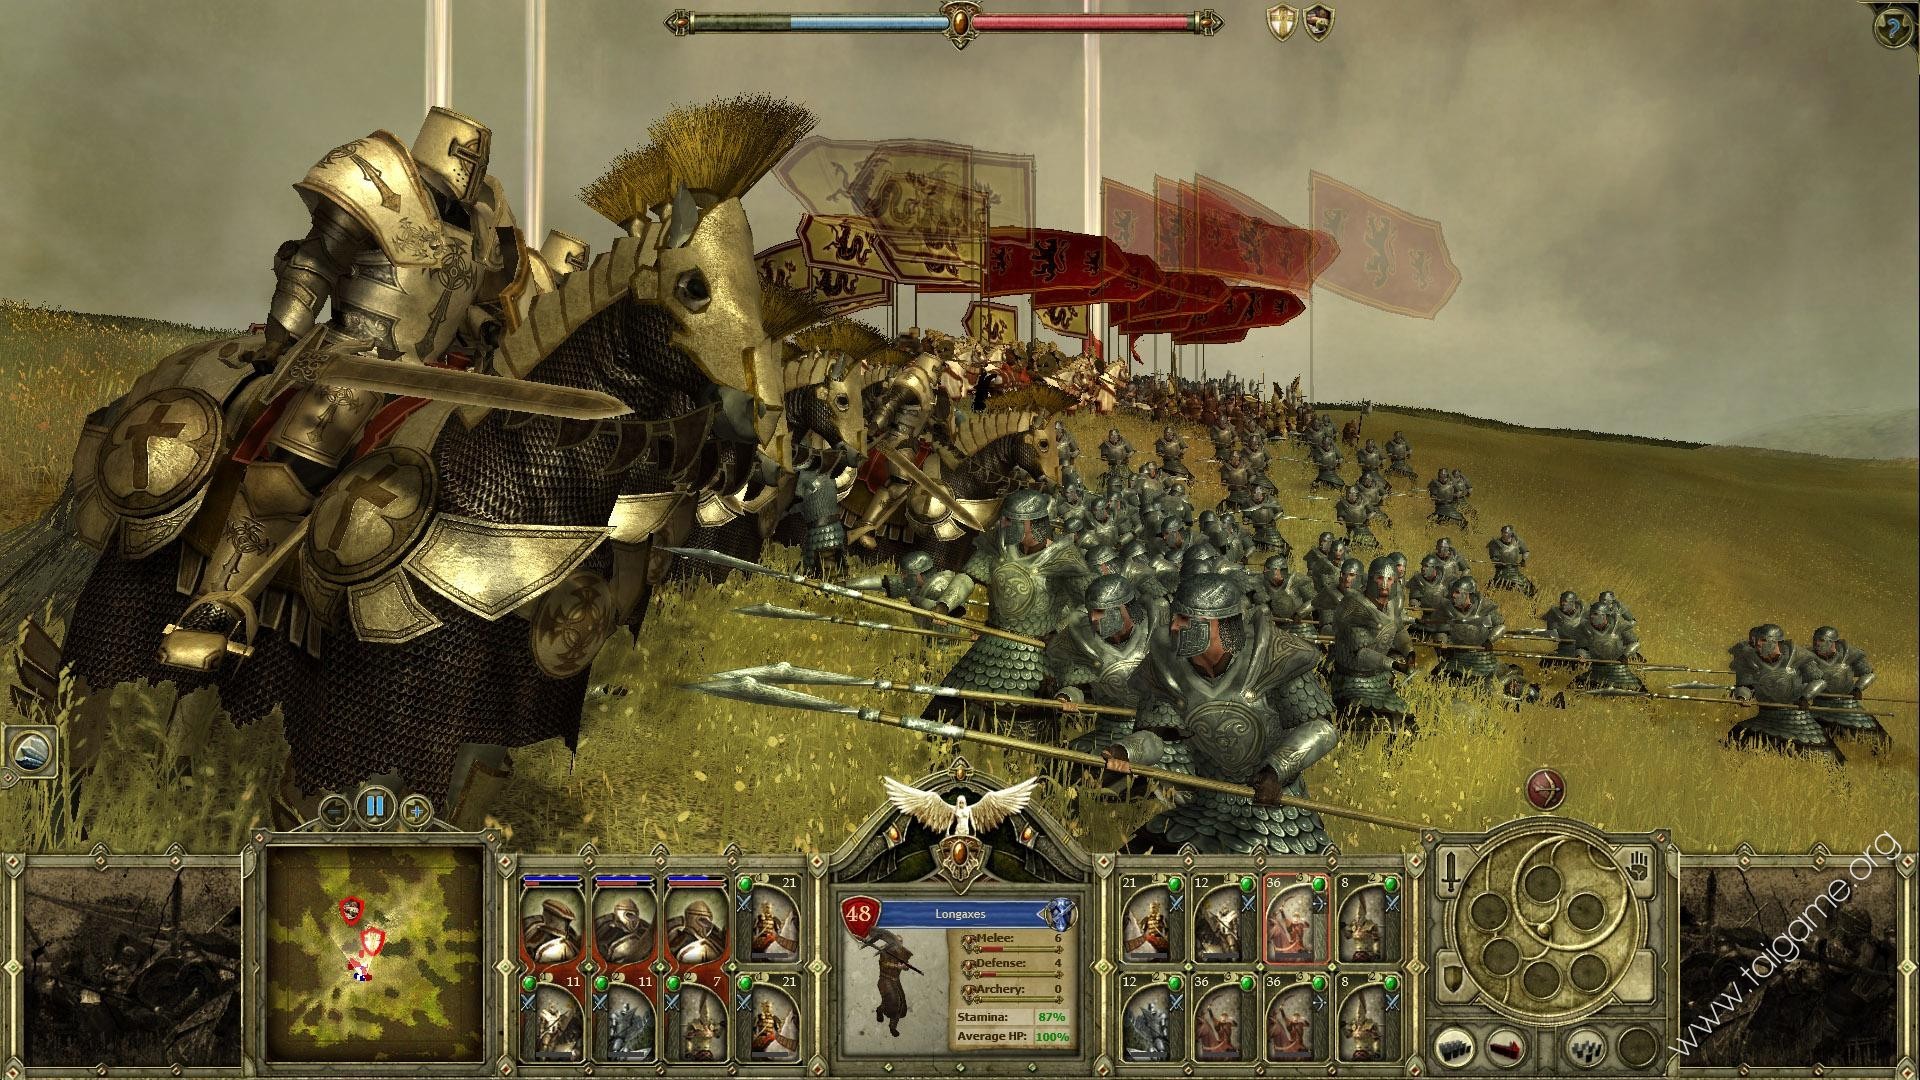 King arthur legend of the sword pc game